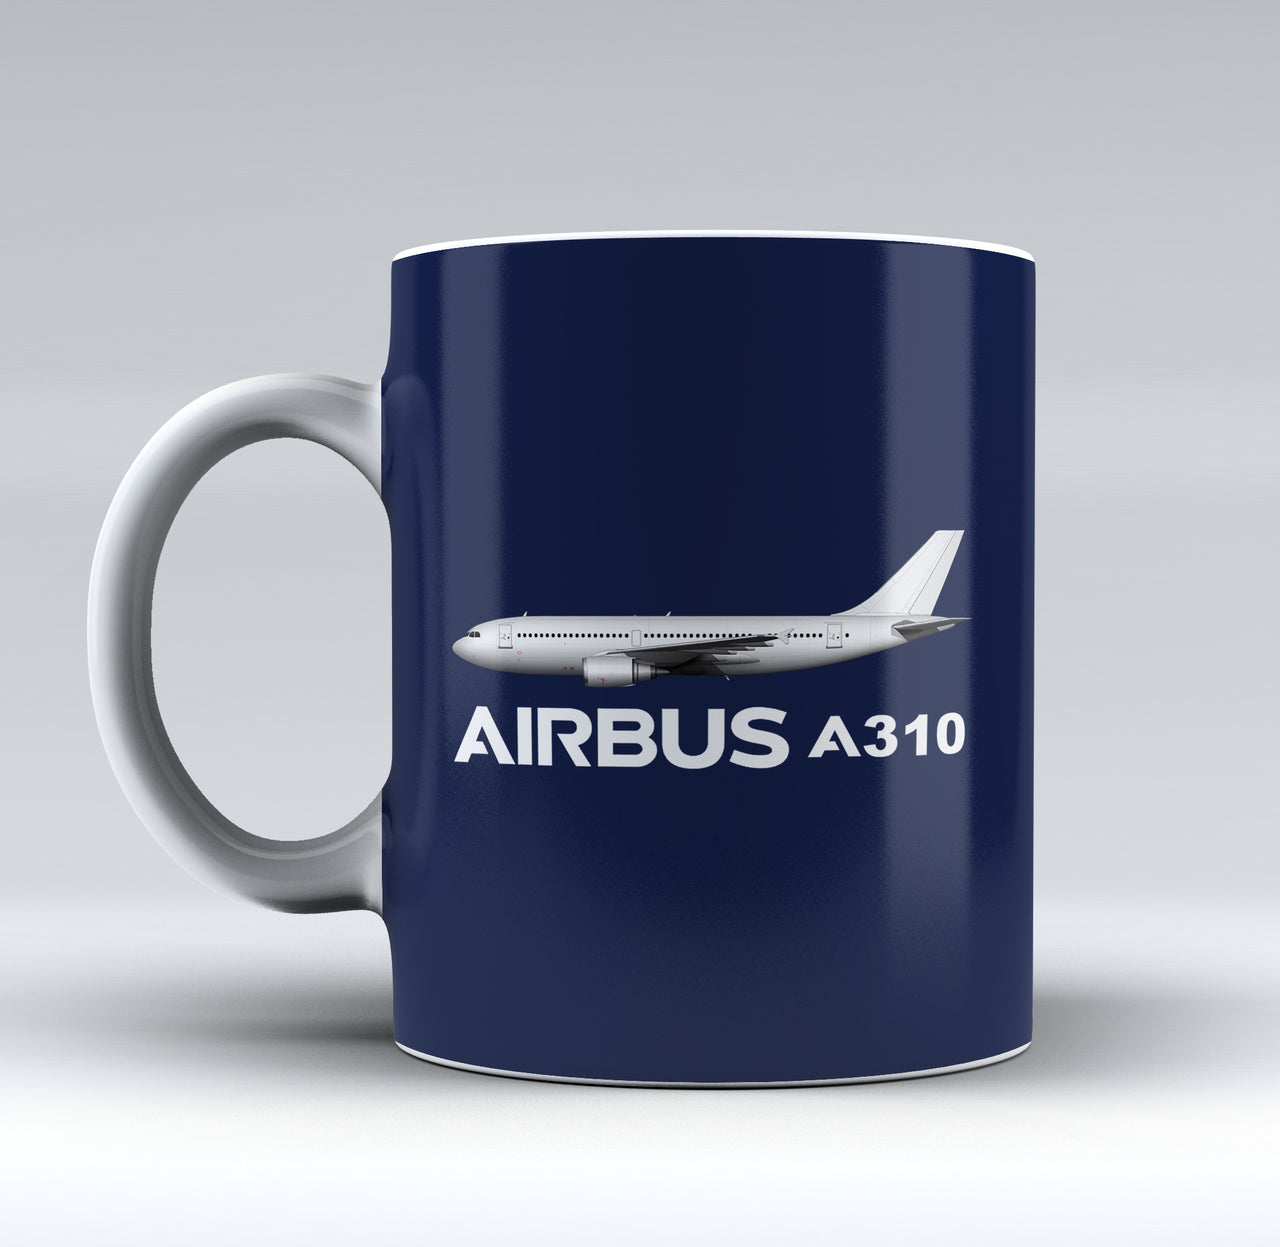 The Airbus A310 Designed Mugs